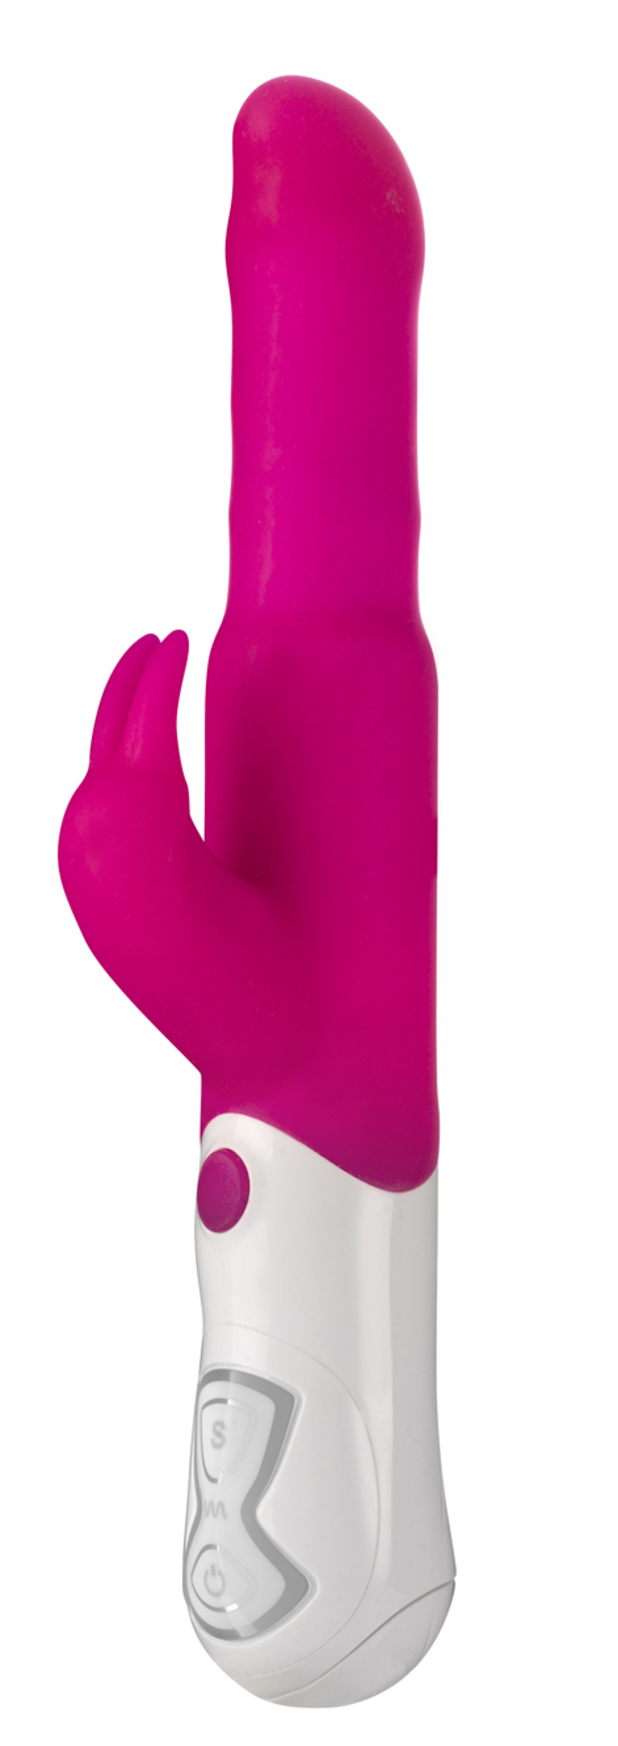 The Rabbit Sex Toy 46